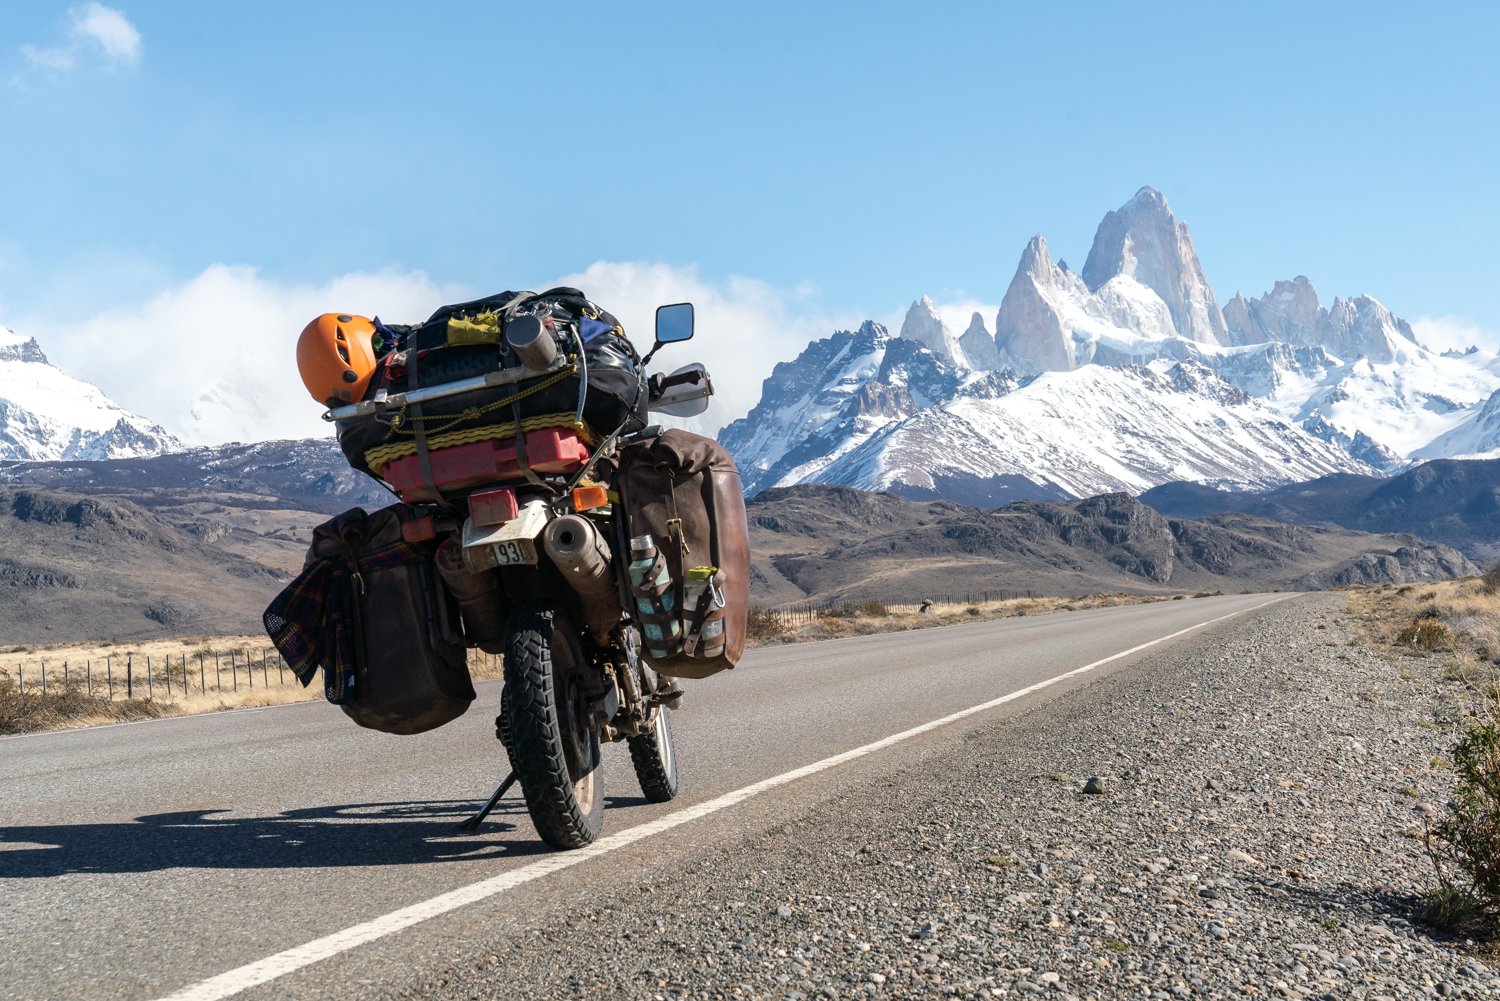 The Pan American Trail via motorcycle